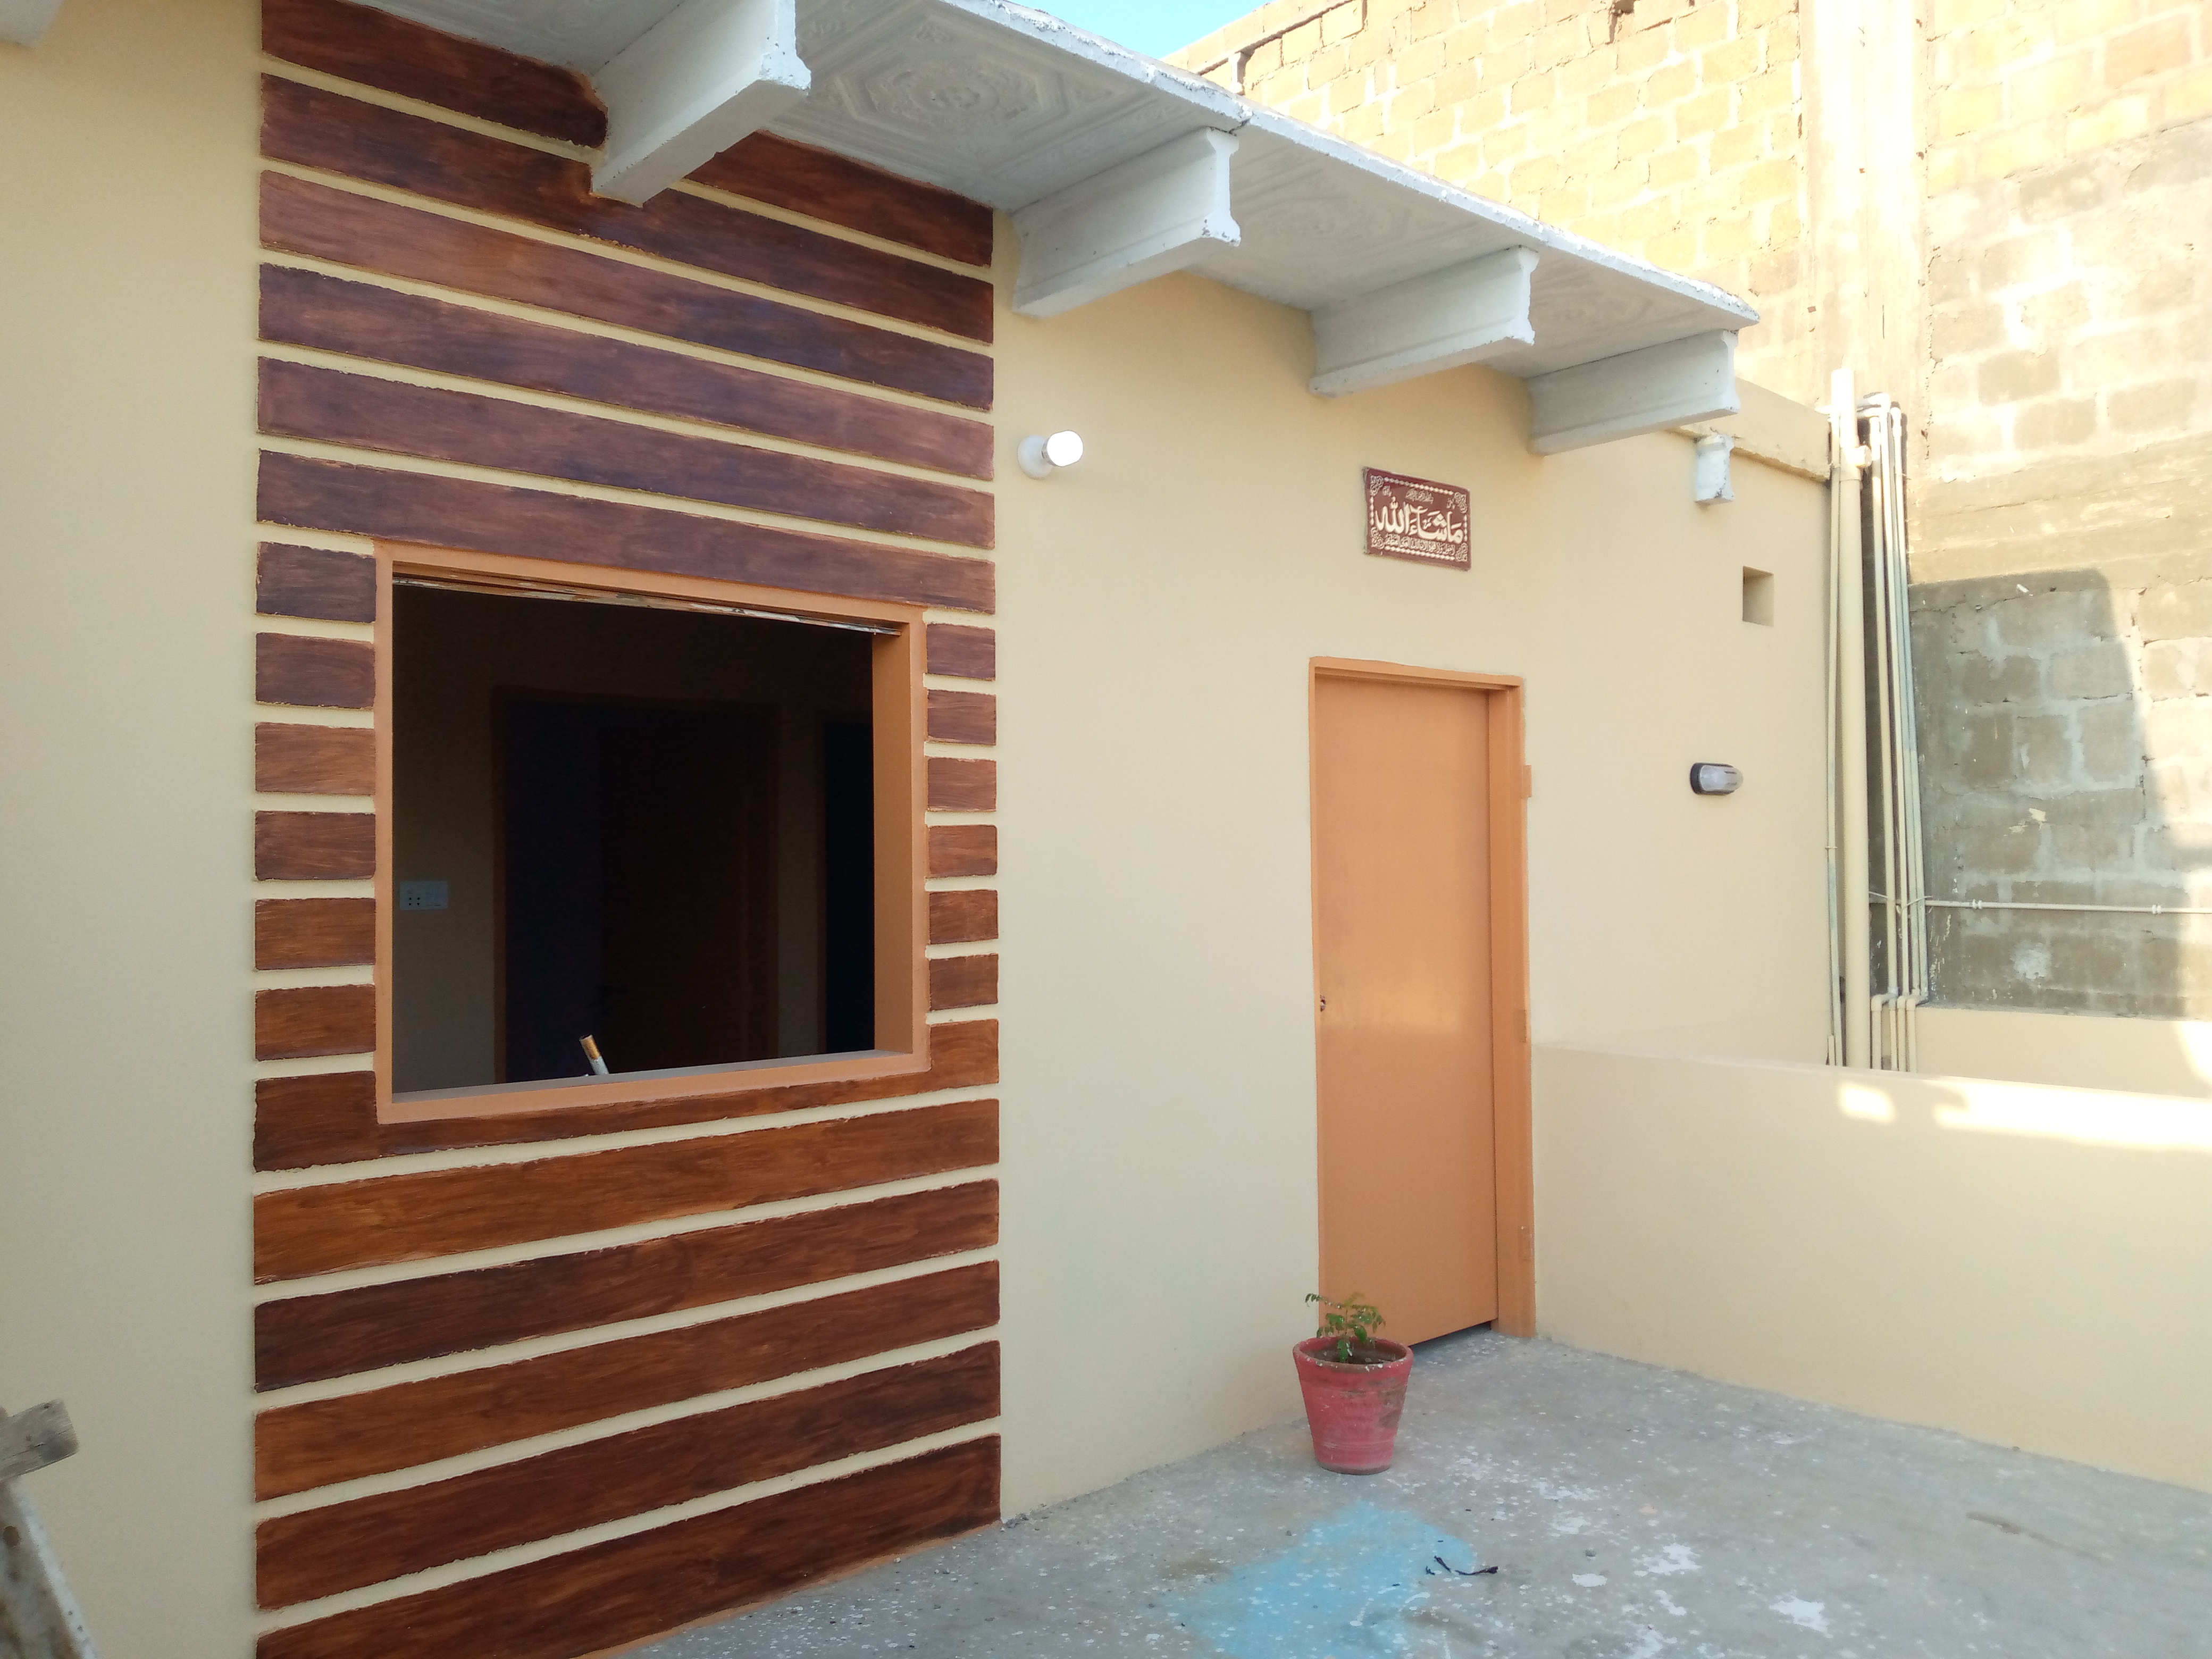 House for Rent (Burhani Town, Malir)